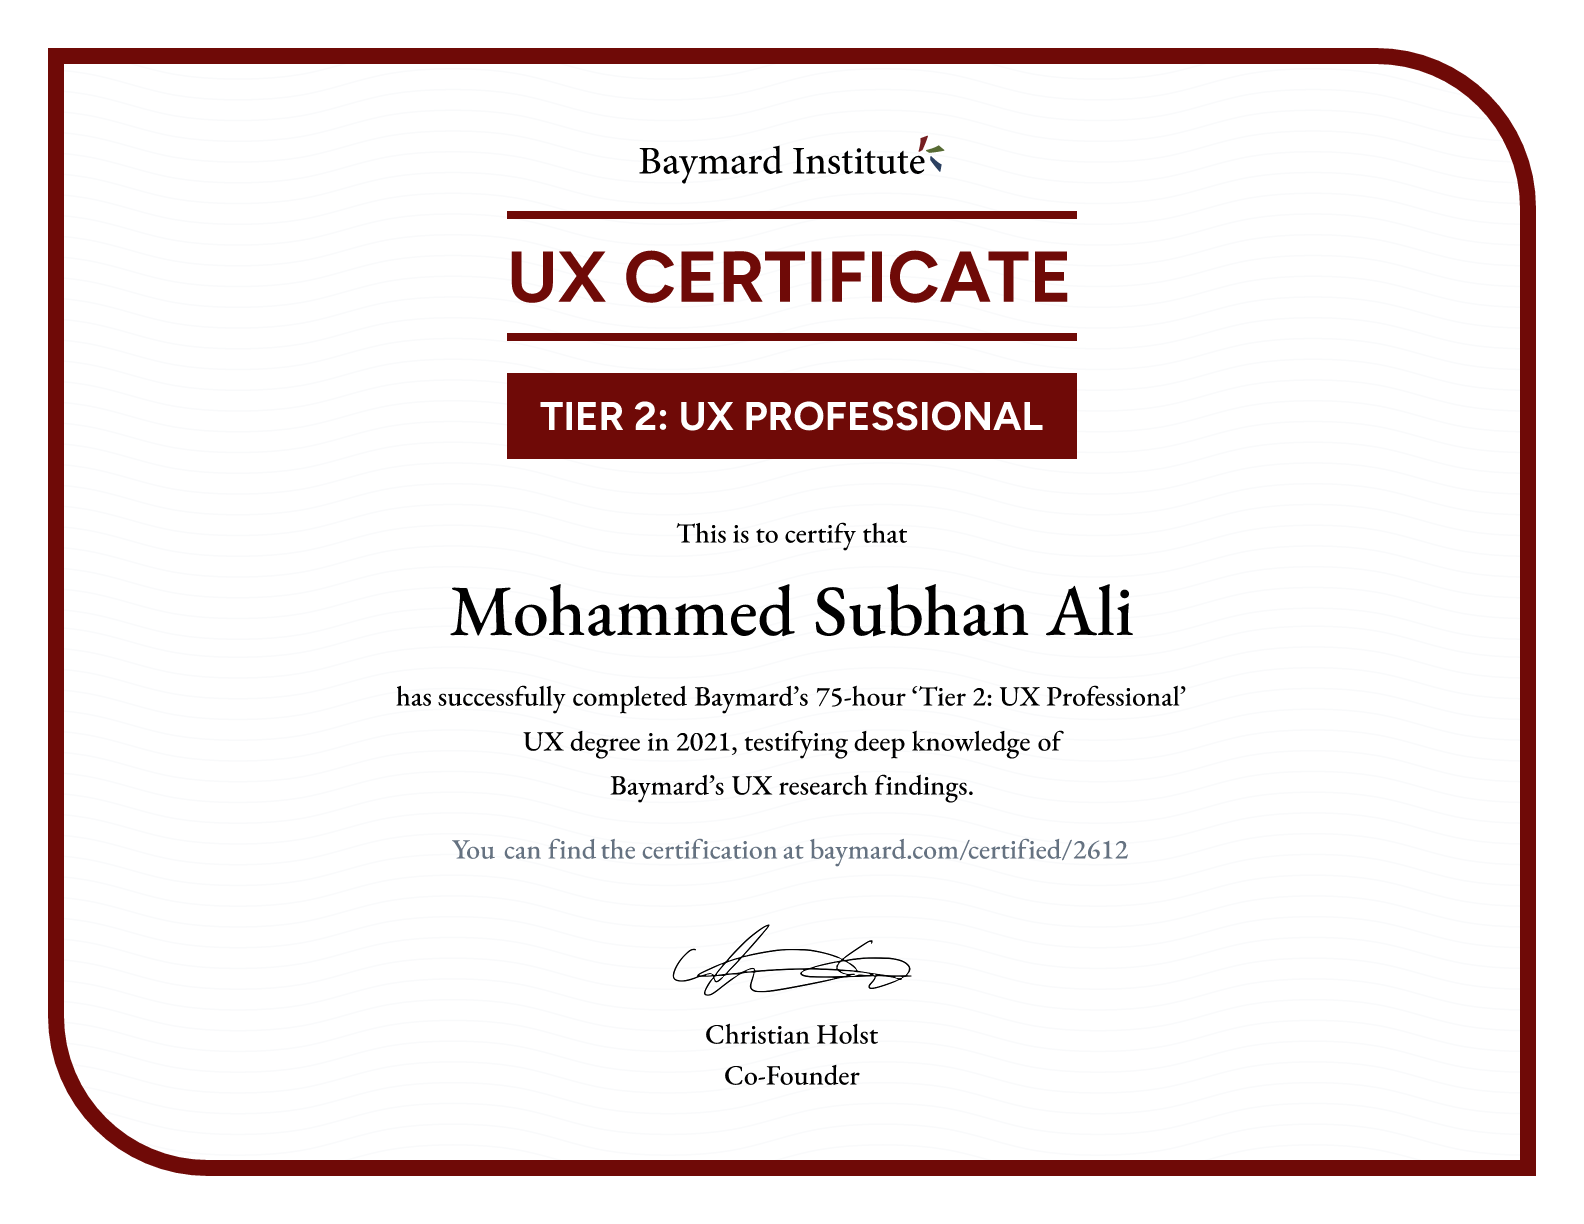 Mohammed Subhan Ali’s certificate